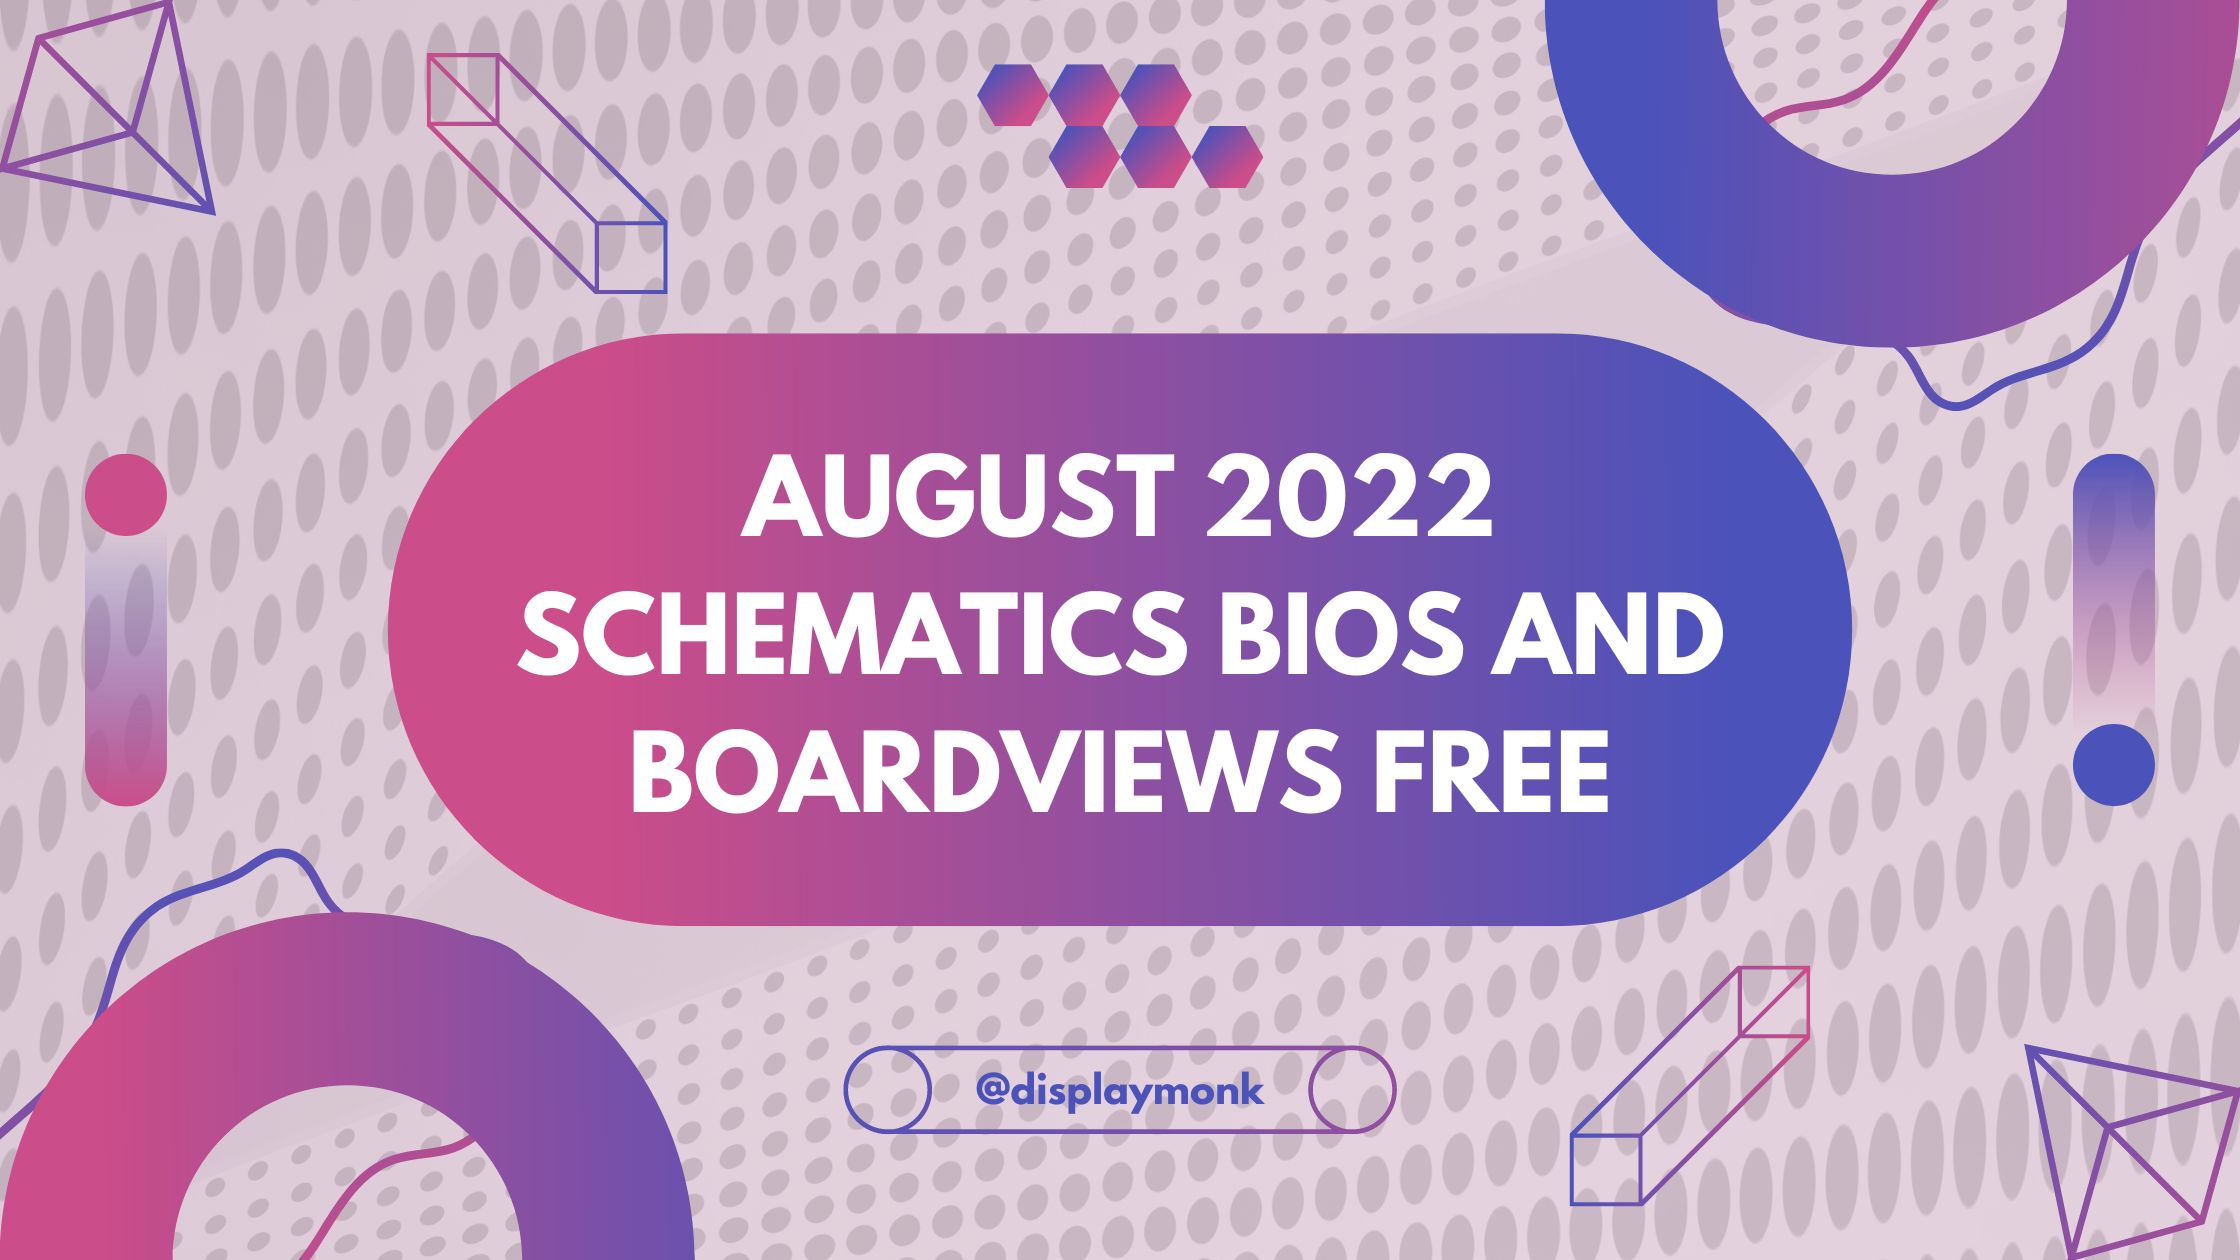 August 2022 Schematics bios and boardviews free